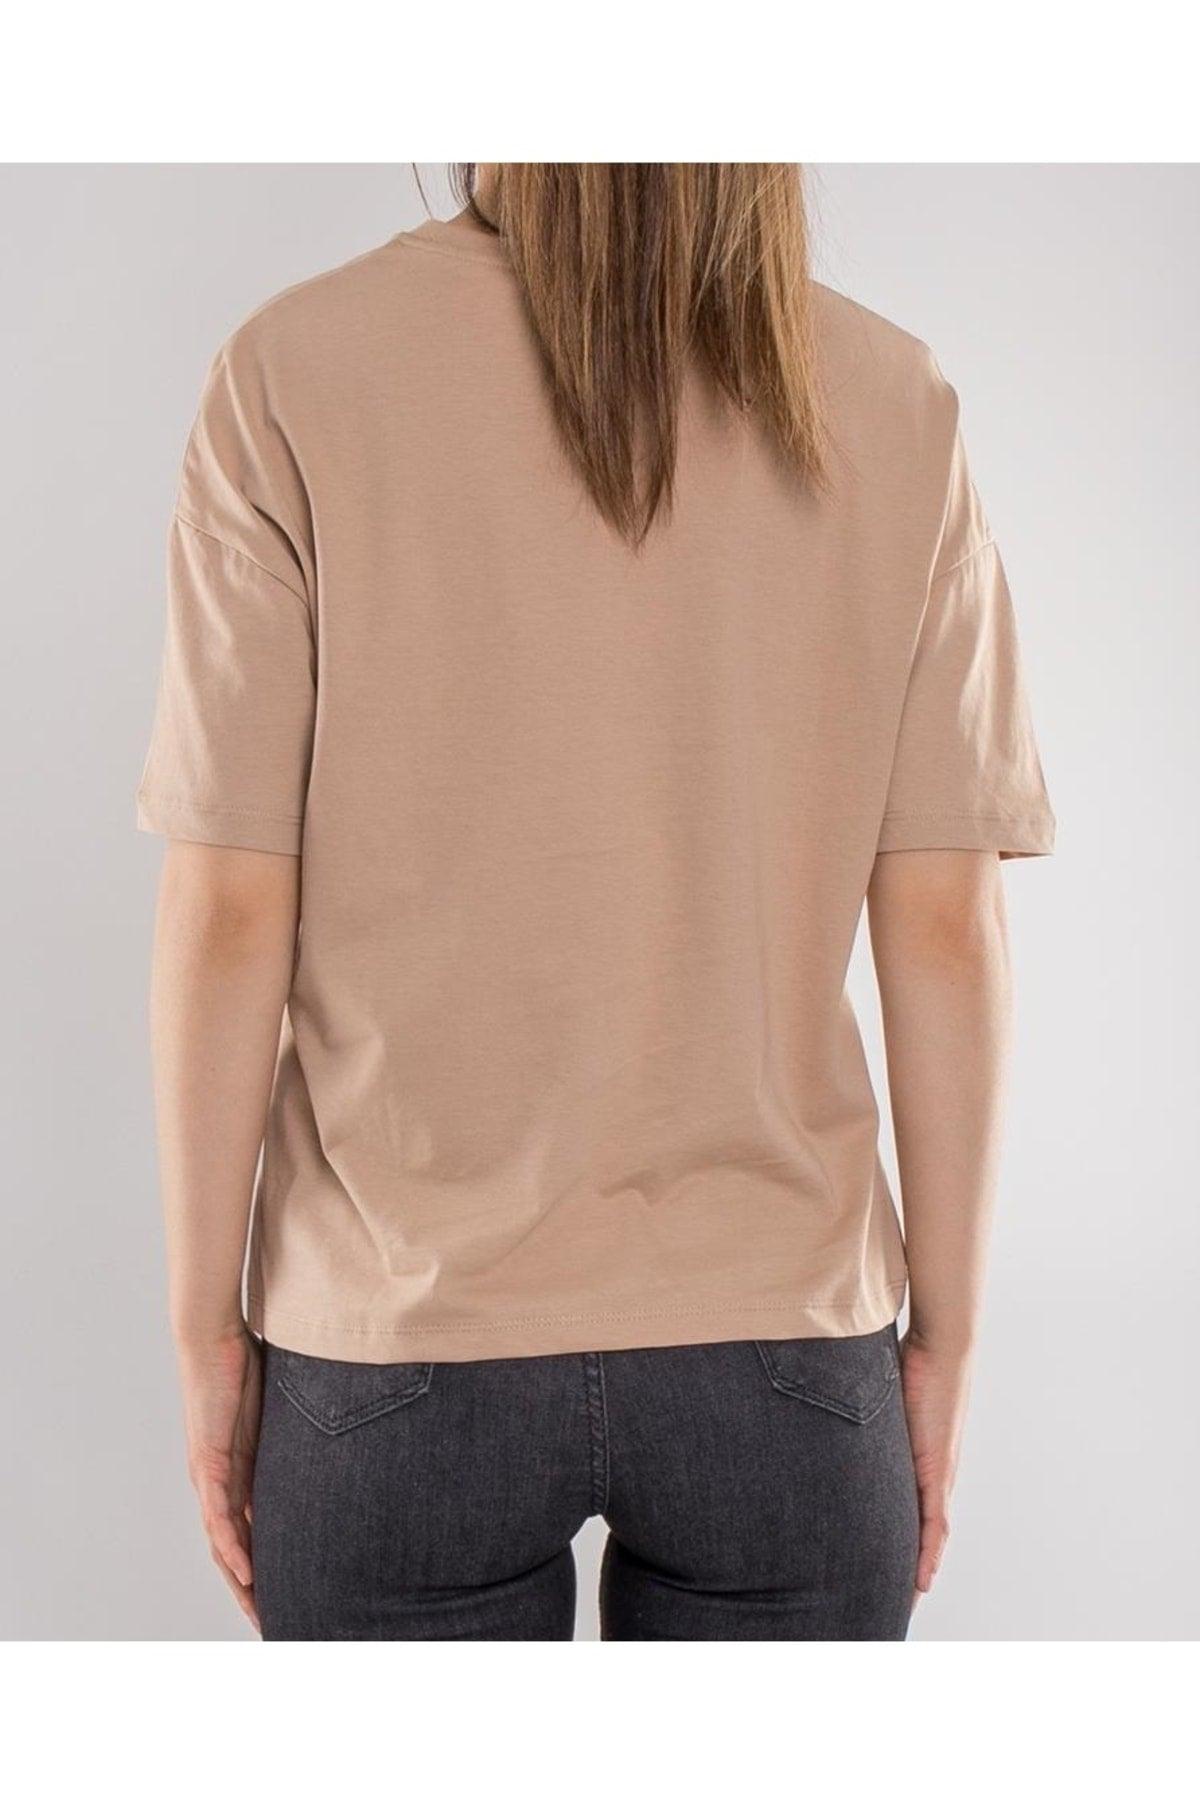 3683 Basic T-shirt-beige2 - Swordslife